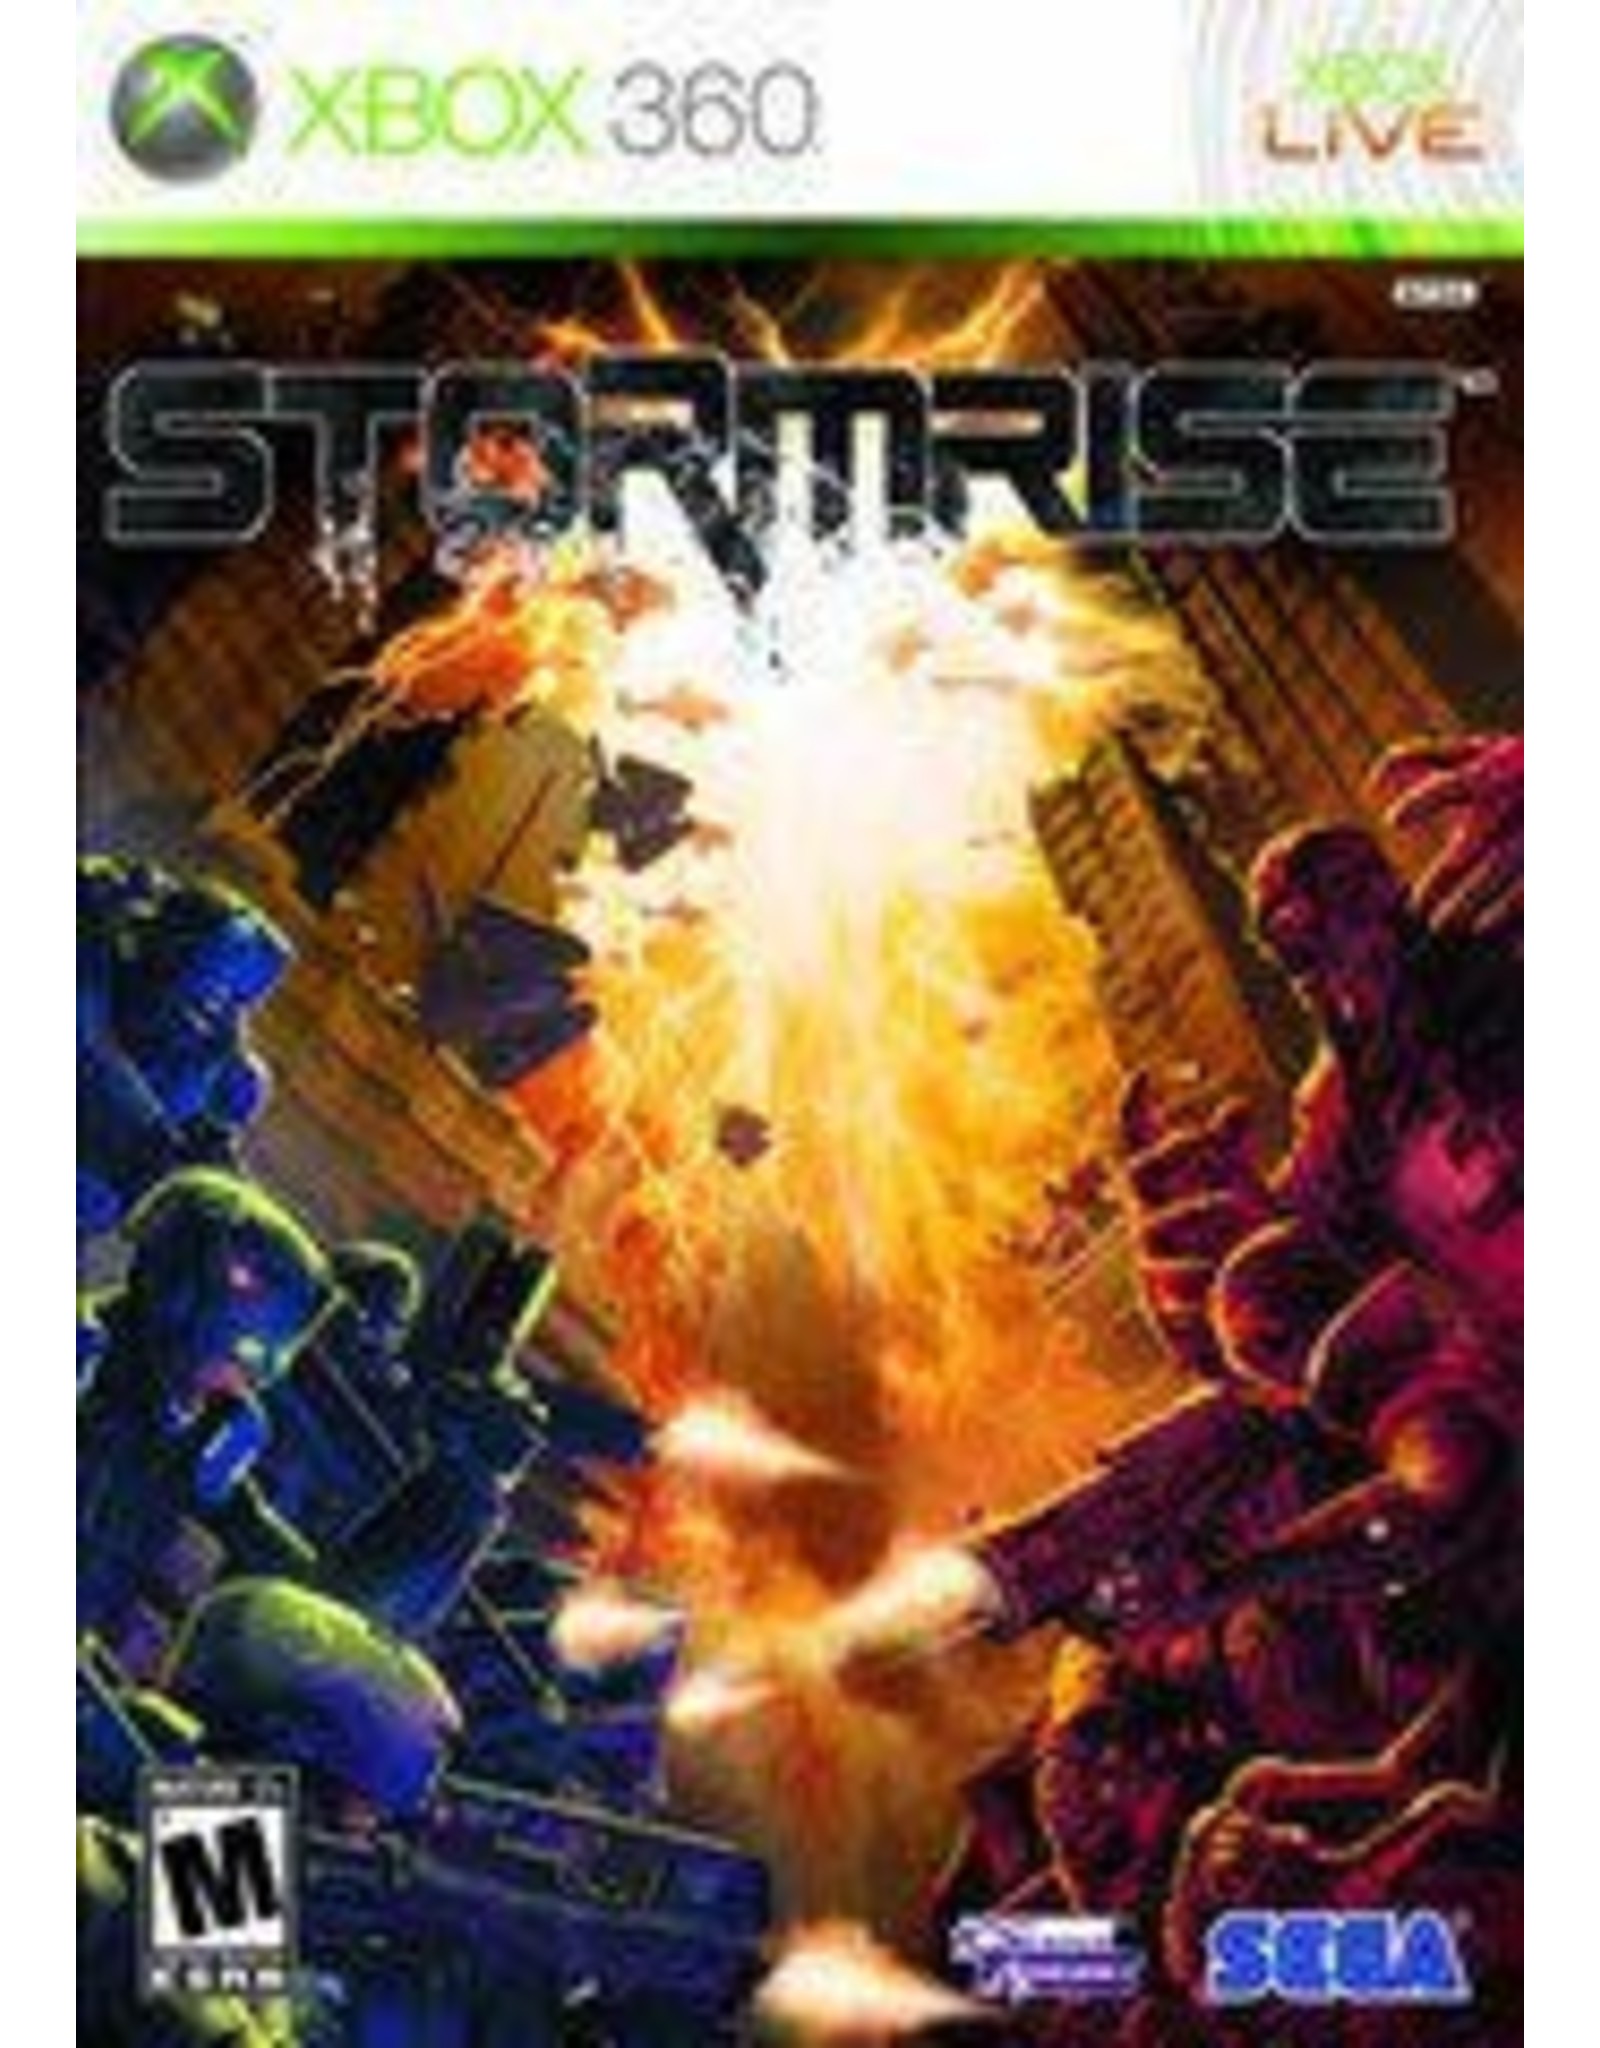 Xbox 360 Stormrise (CiB, Damaged Manual)